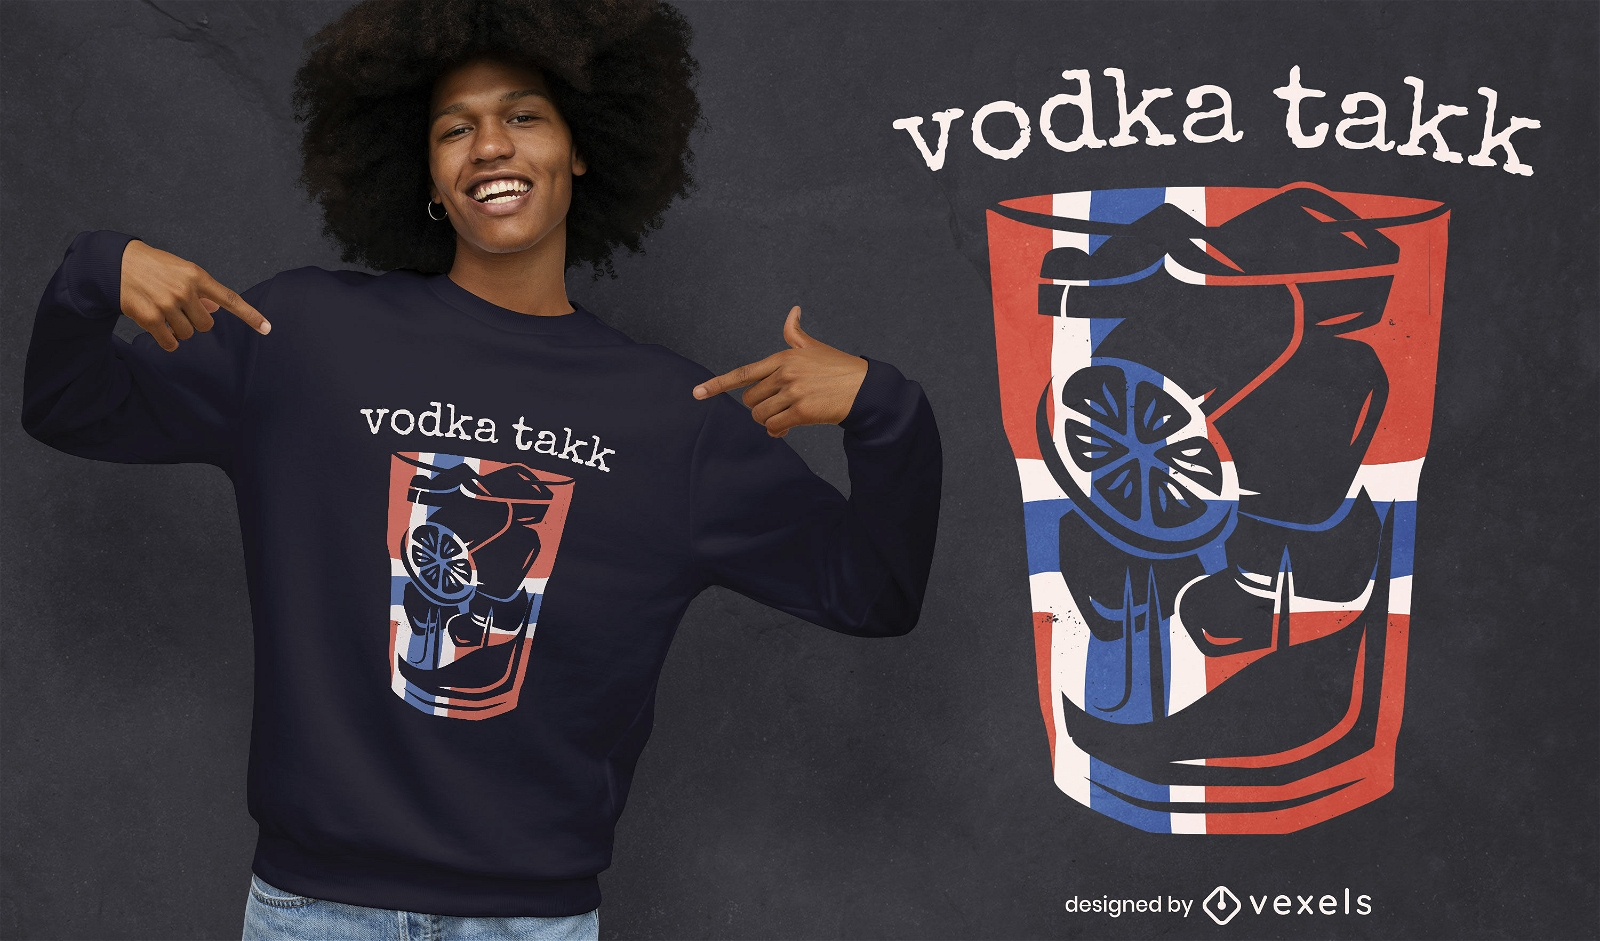 Diseño de camiseta de bebida alcohólica de vodka.